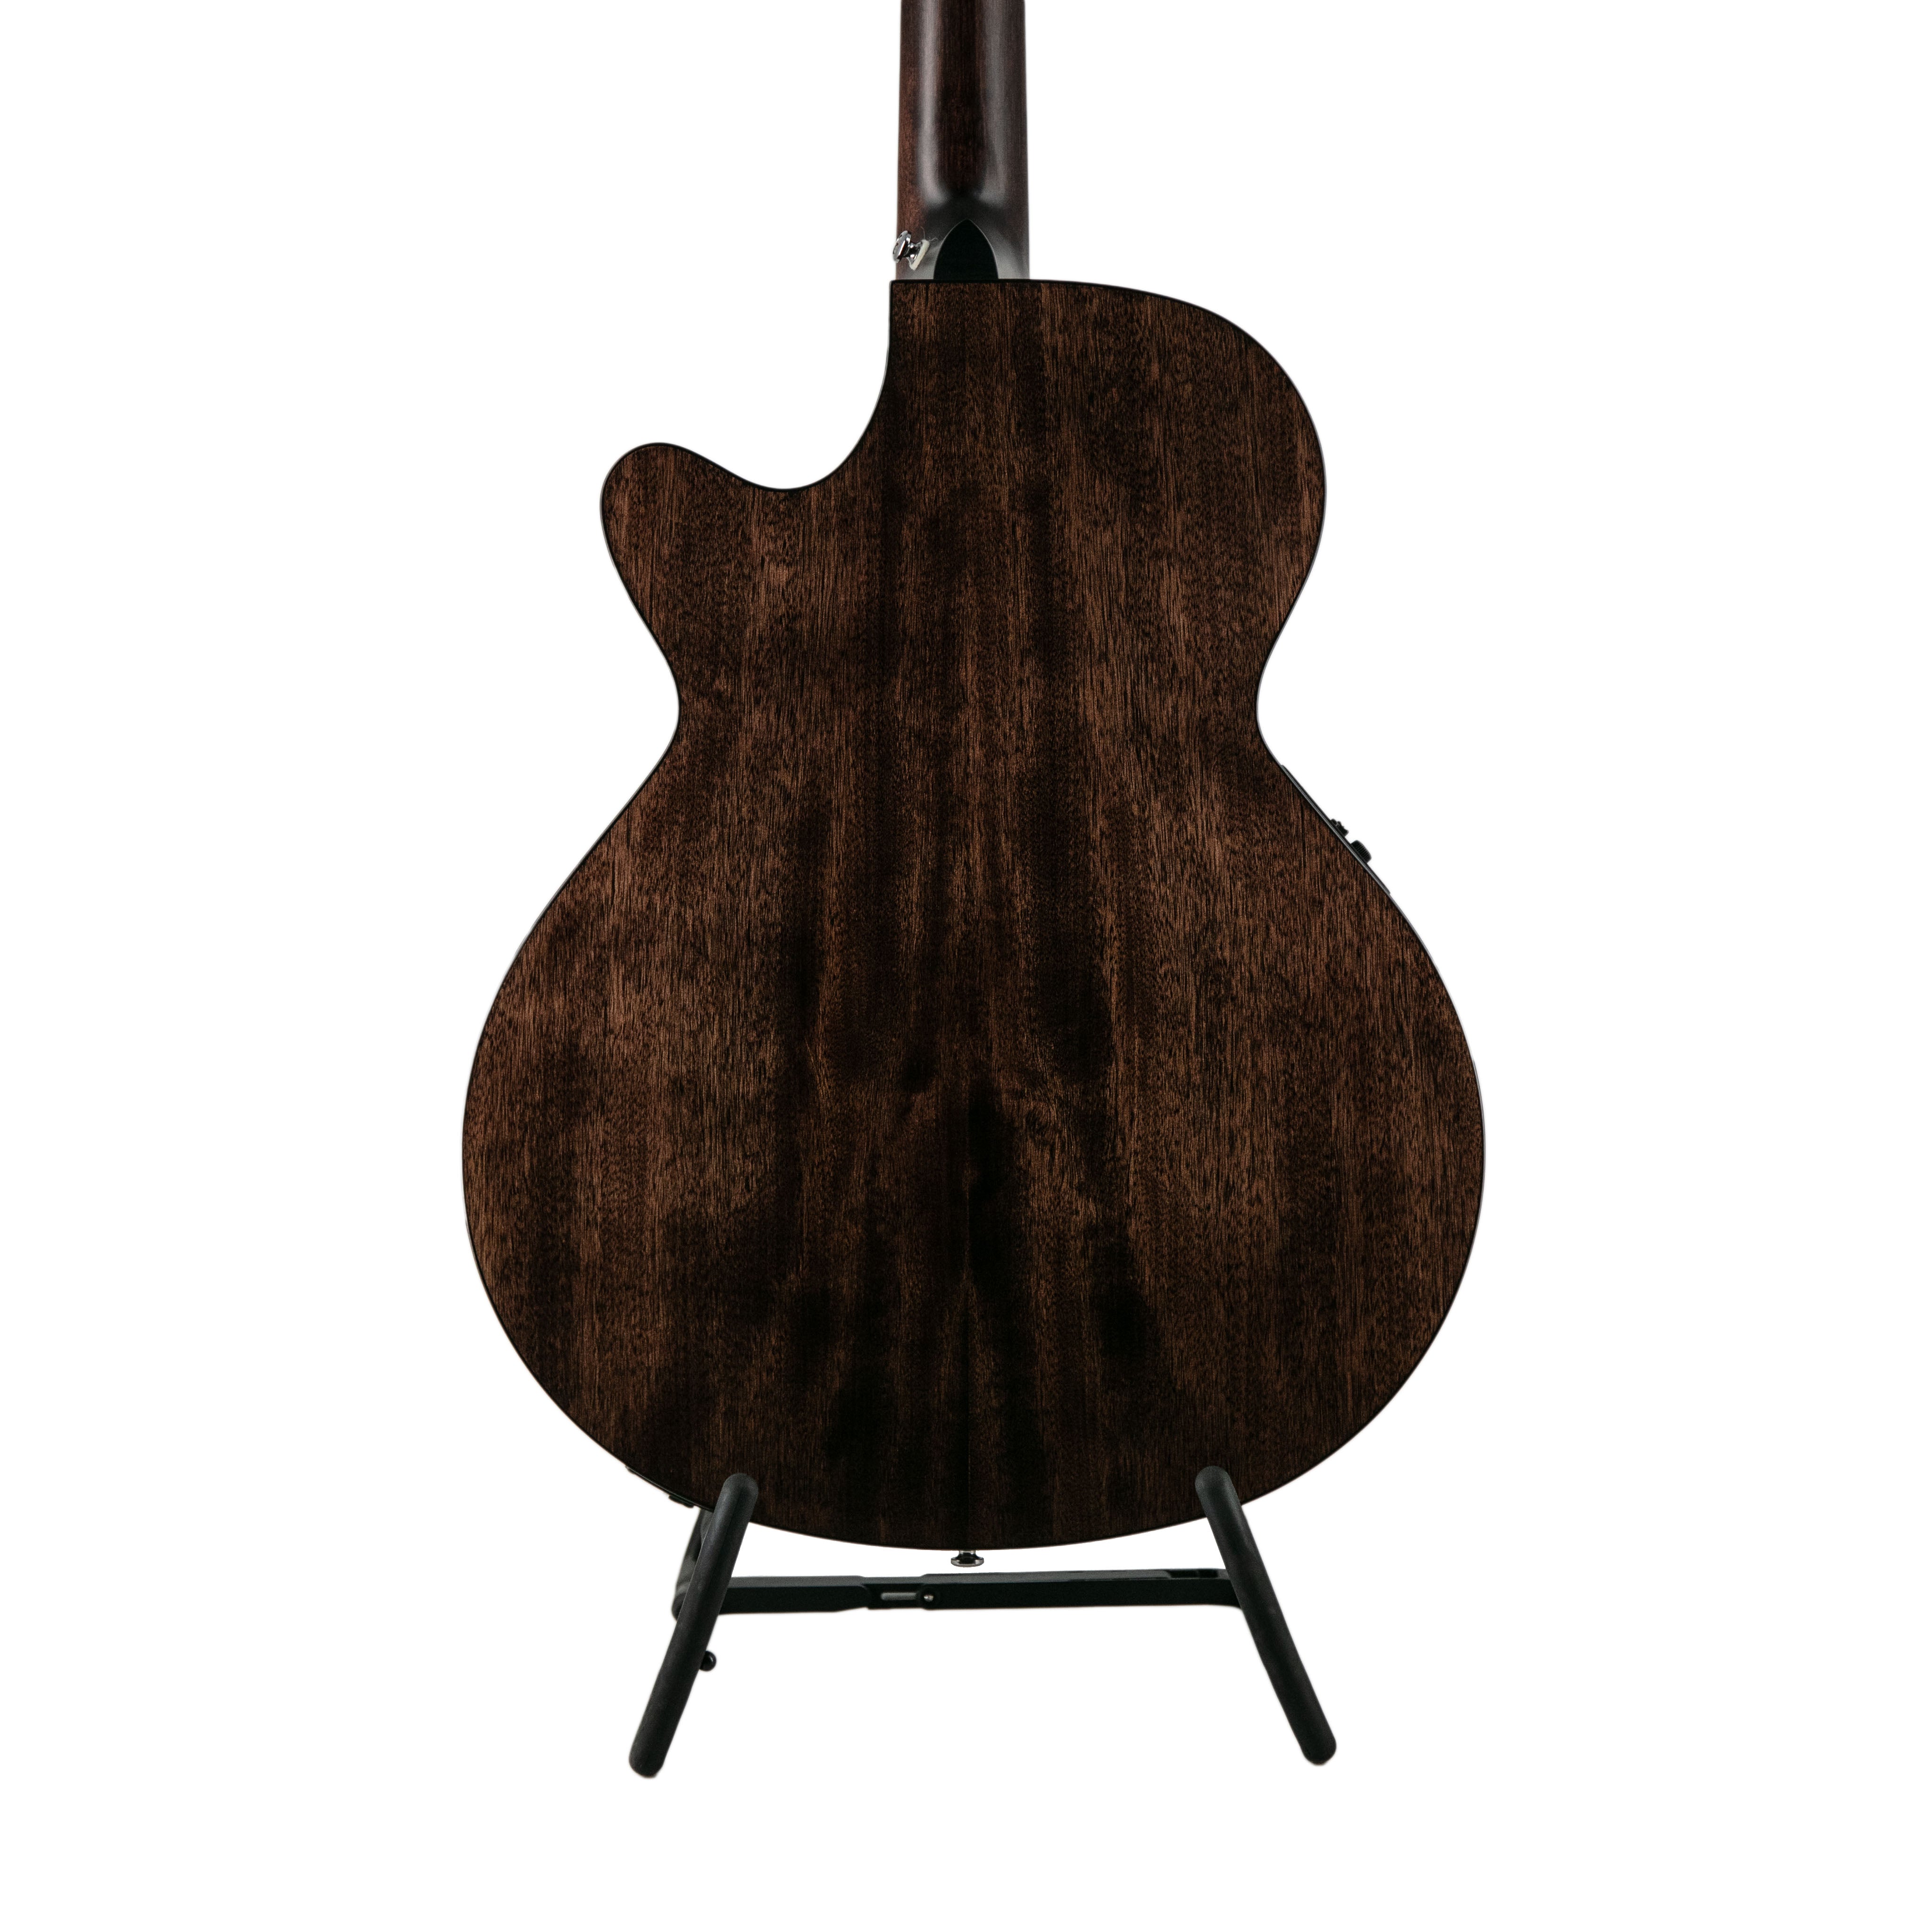 Cort SFX-E Acoustic Guitar, 3-Tone Satin Sunburst, CA210917919 – Well  Played Gear